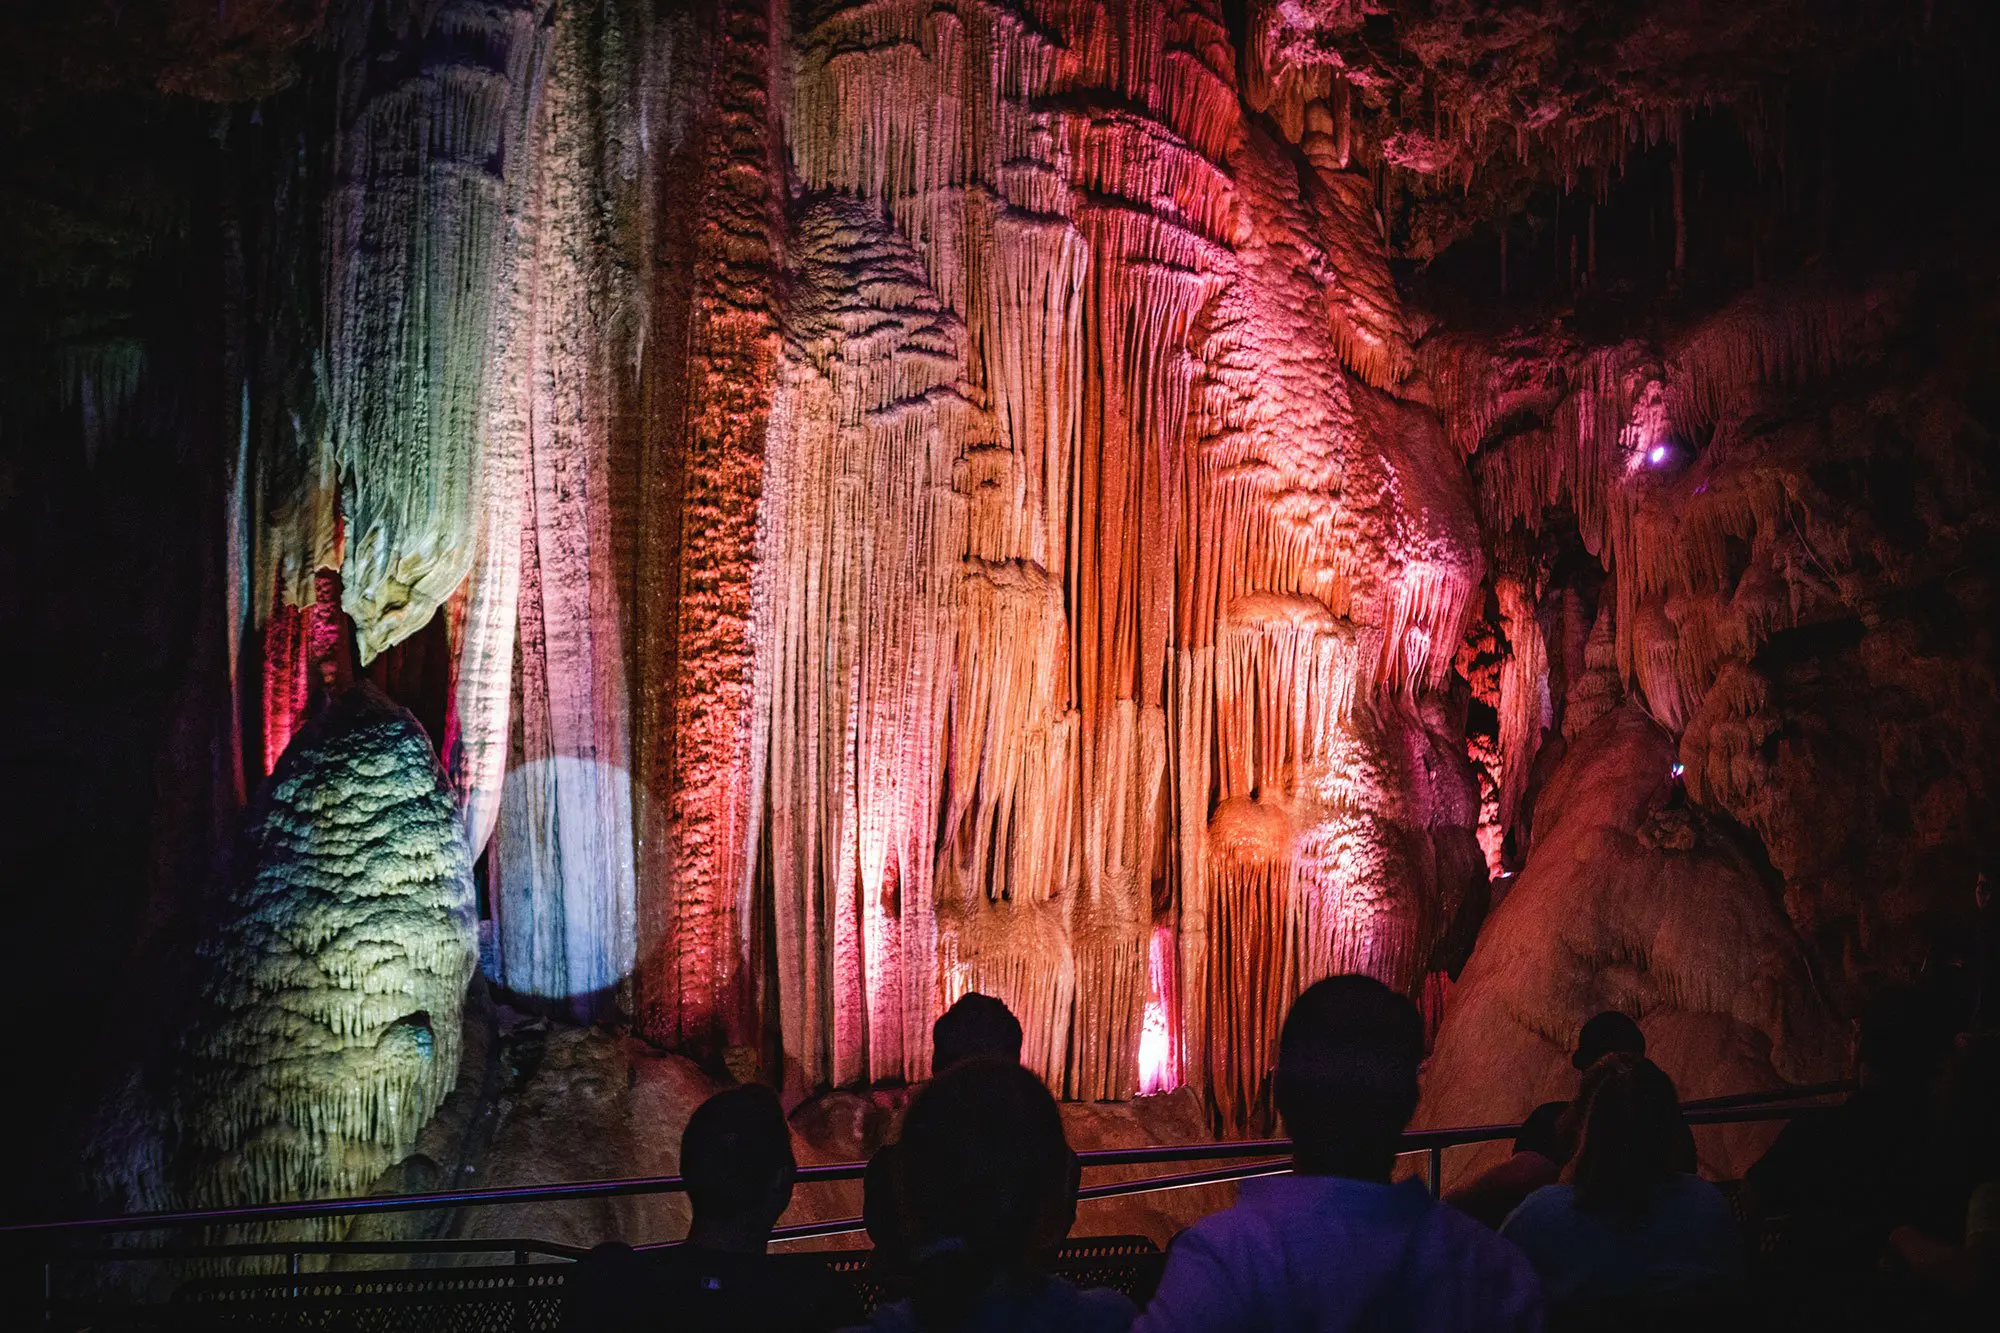 Group of visitors enjoying the light show inside of Meramec Caverns